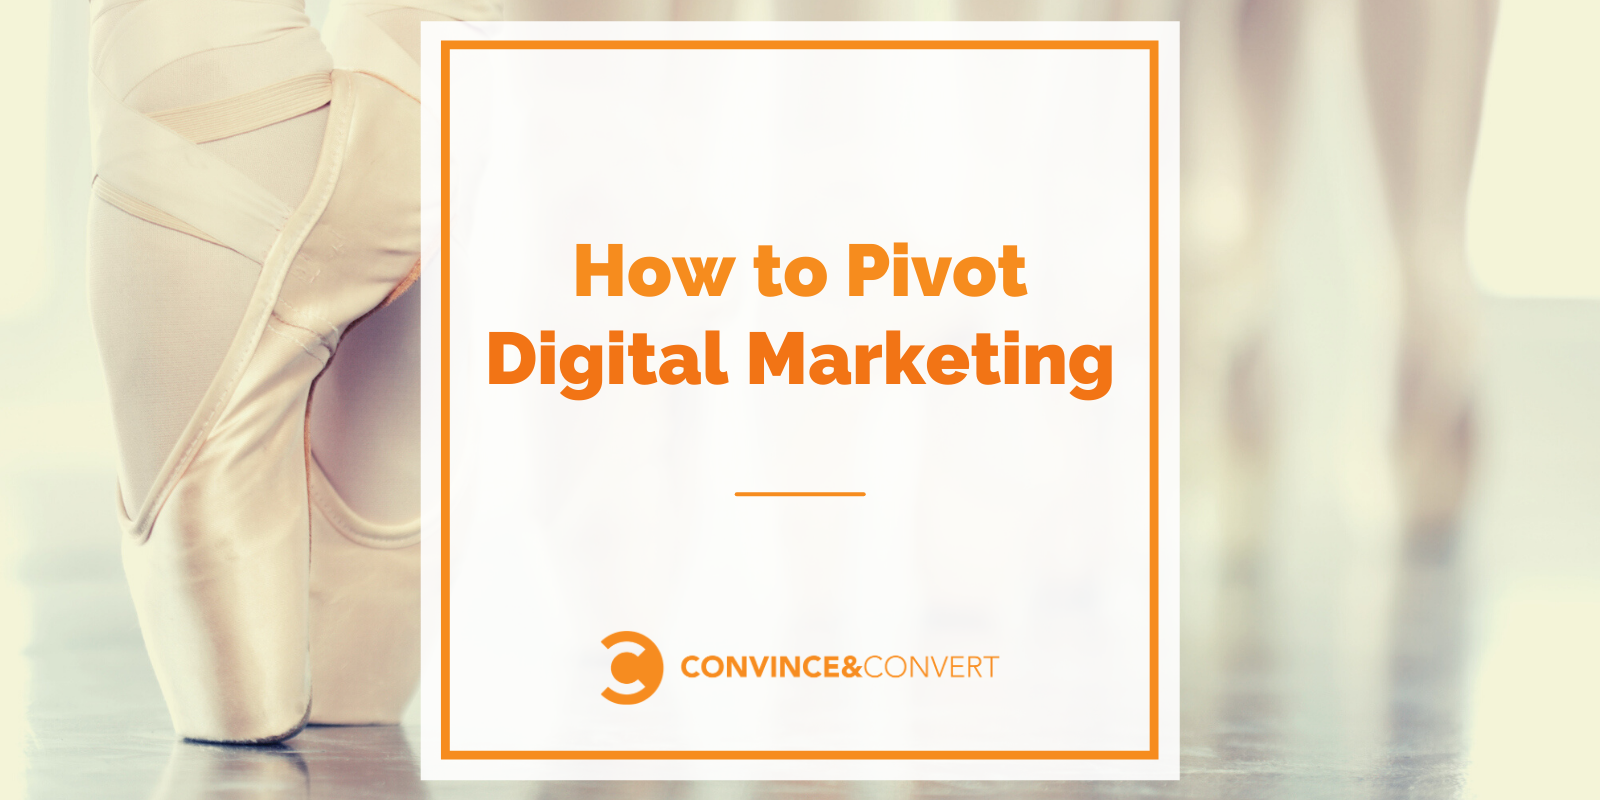 How to Pivot Digital Marketing